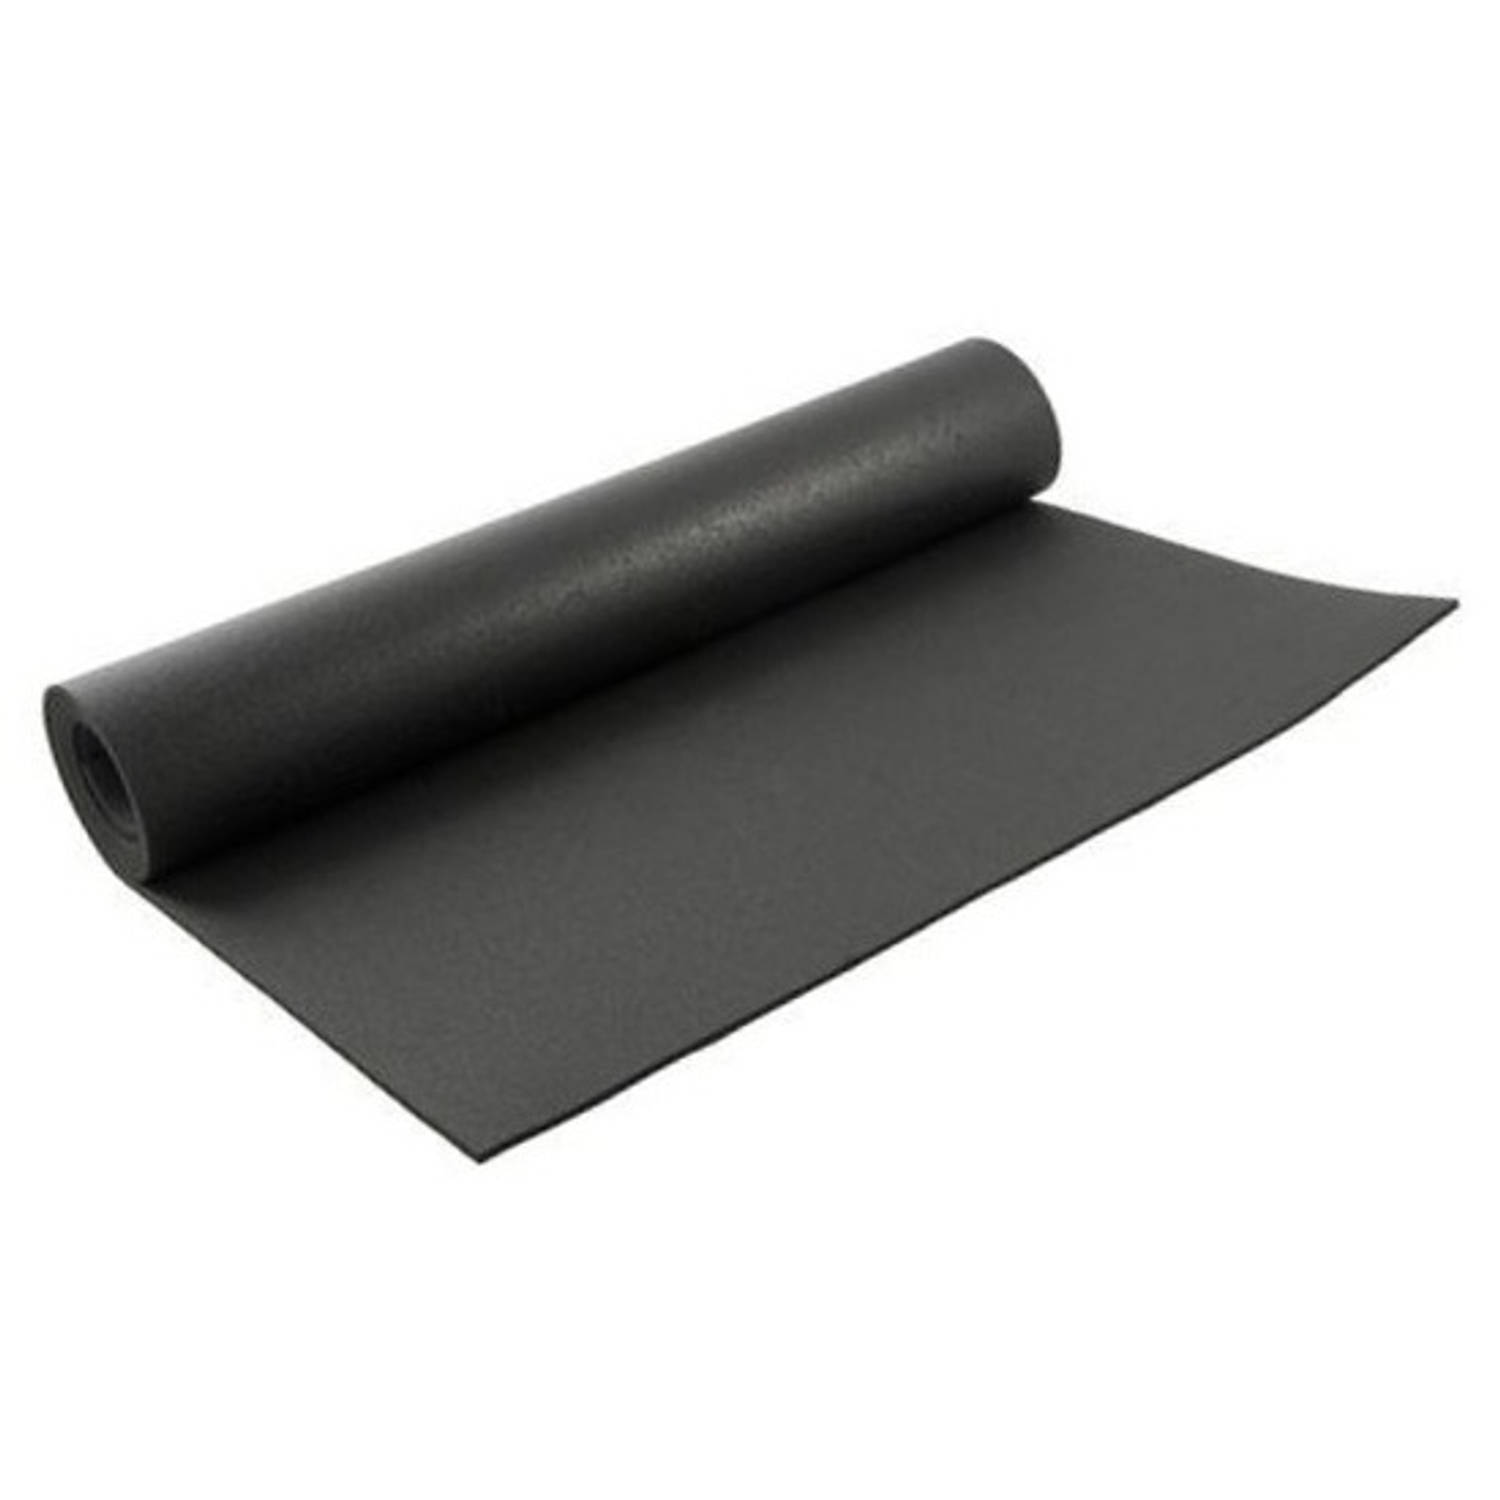 Zwarte Yogamat-sportmat 180 X 60 Cm Sportmatten Voor O.a. Yoga, Pilates En Fitness